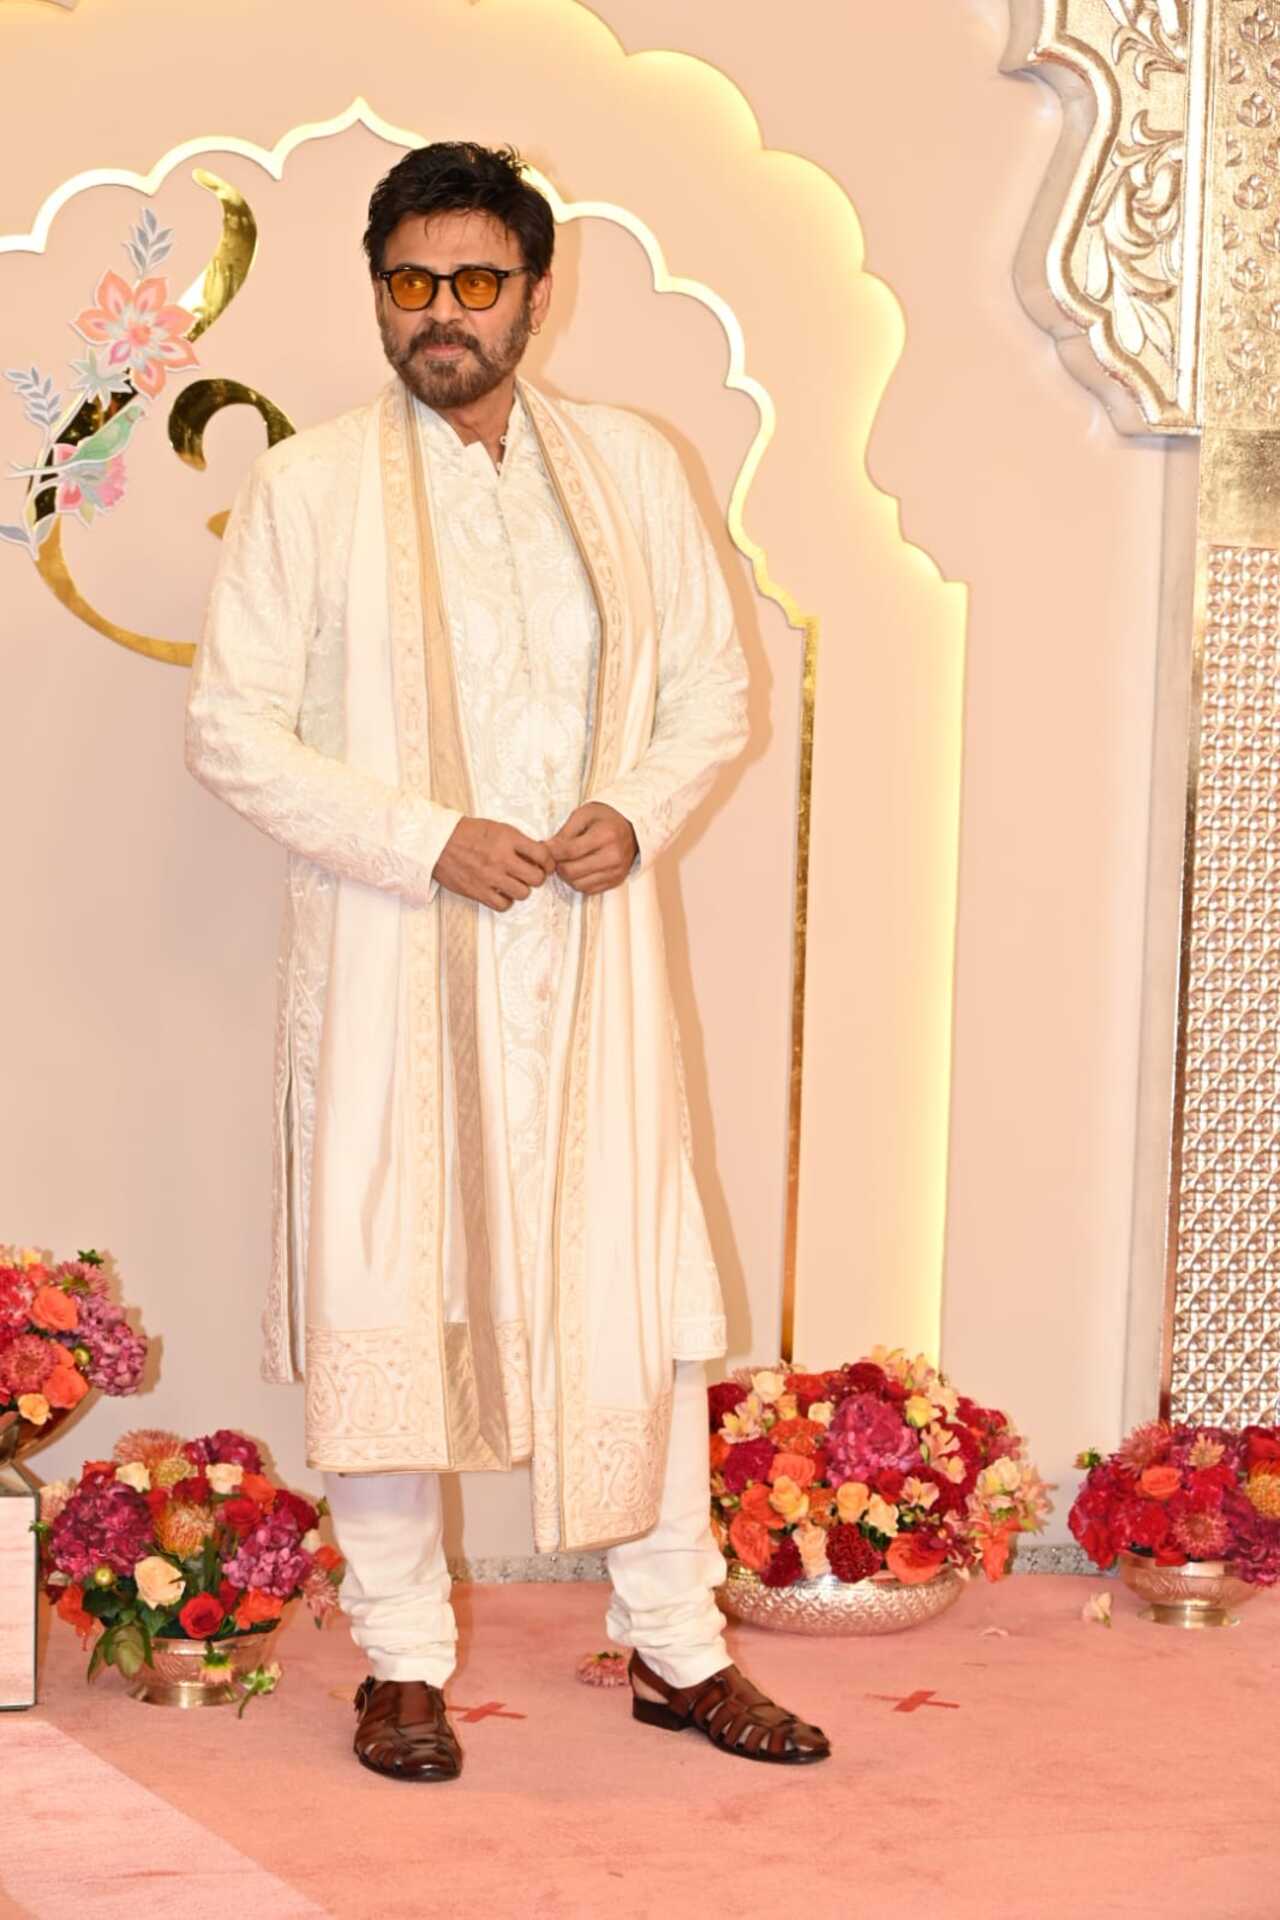 South star Venkatesh Daggubati arrives in a white sherwani for the wedding